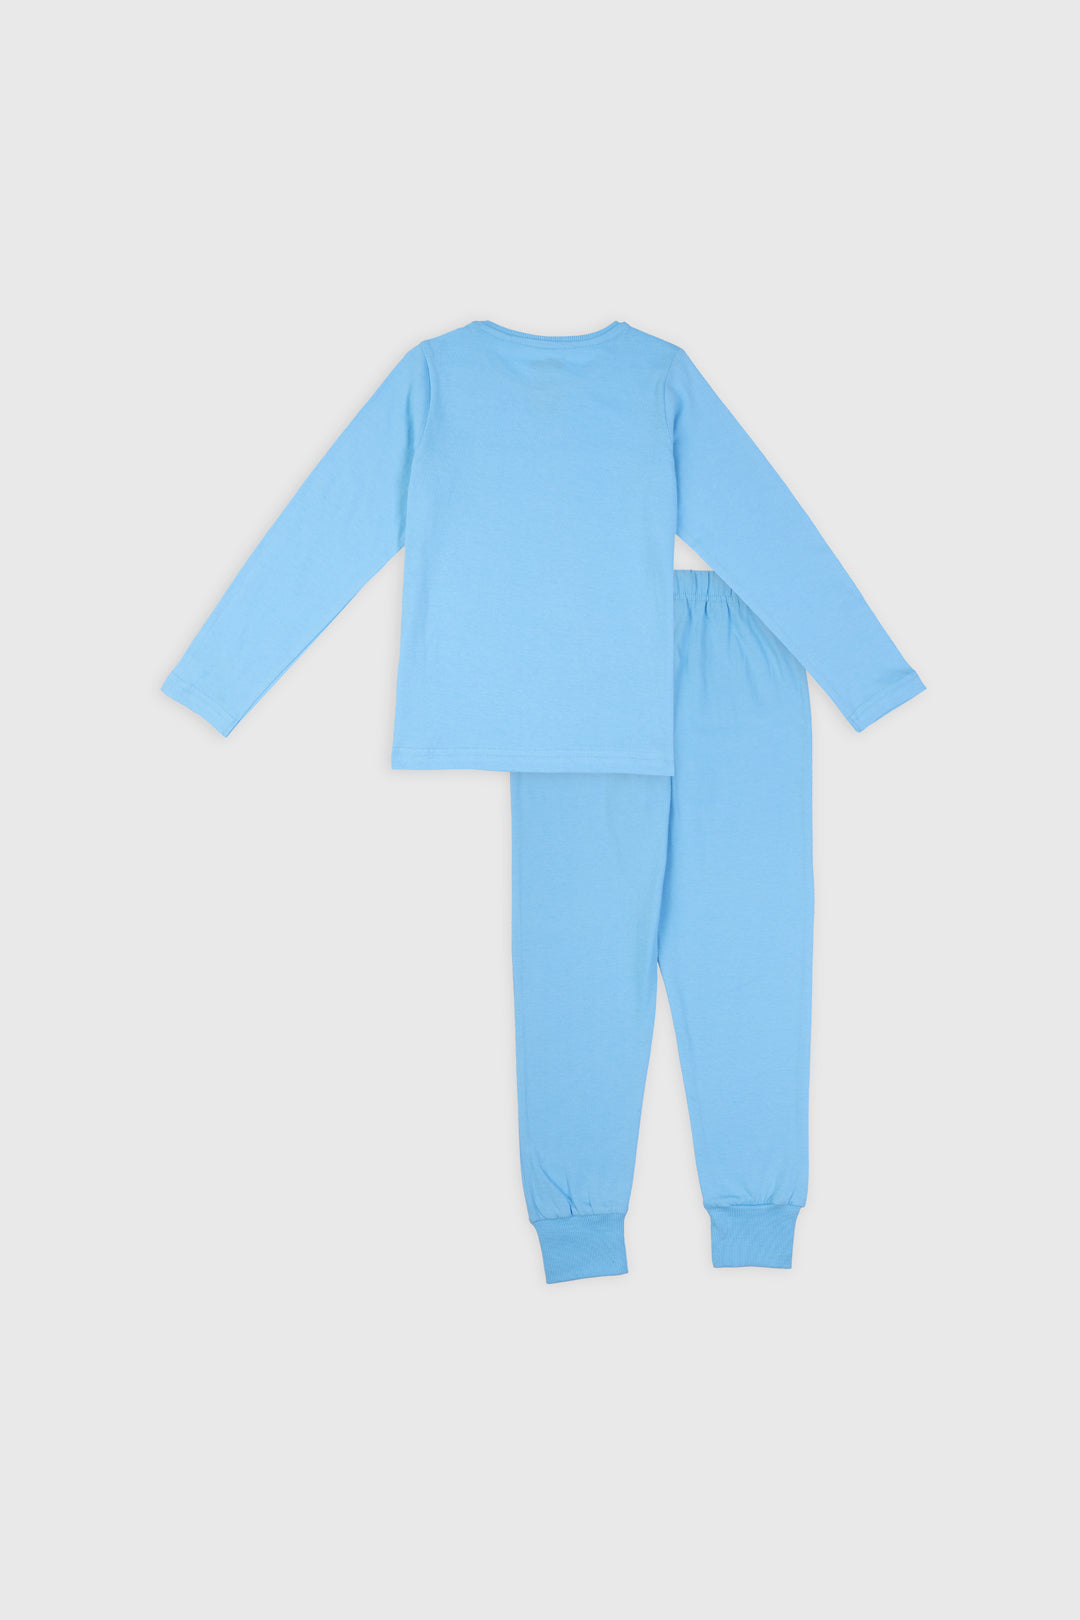 Piglet Napping Pajama Set